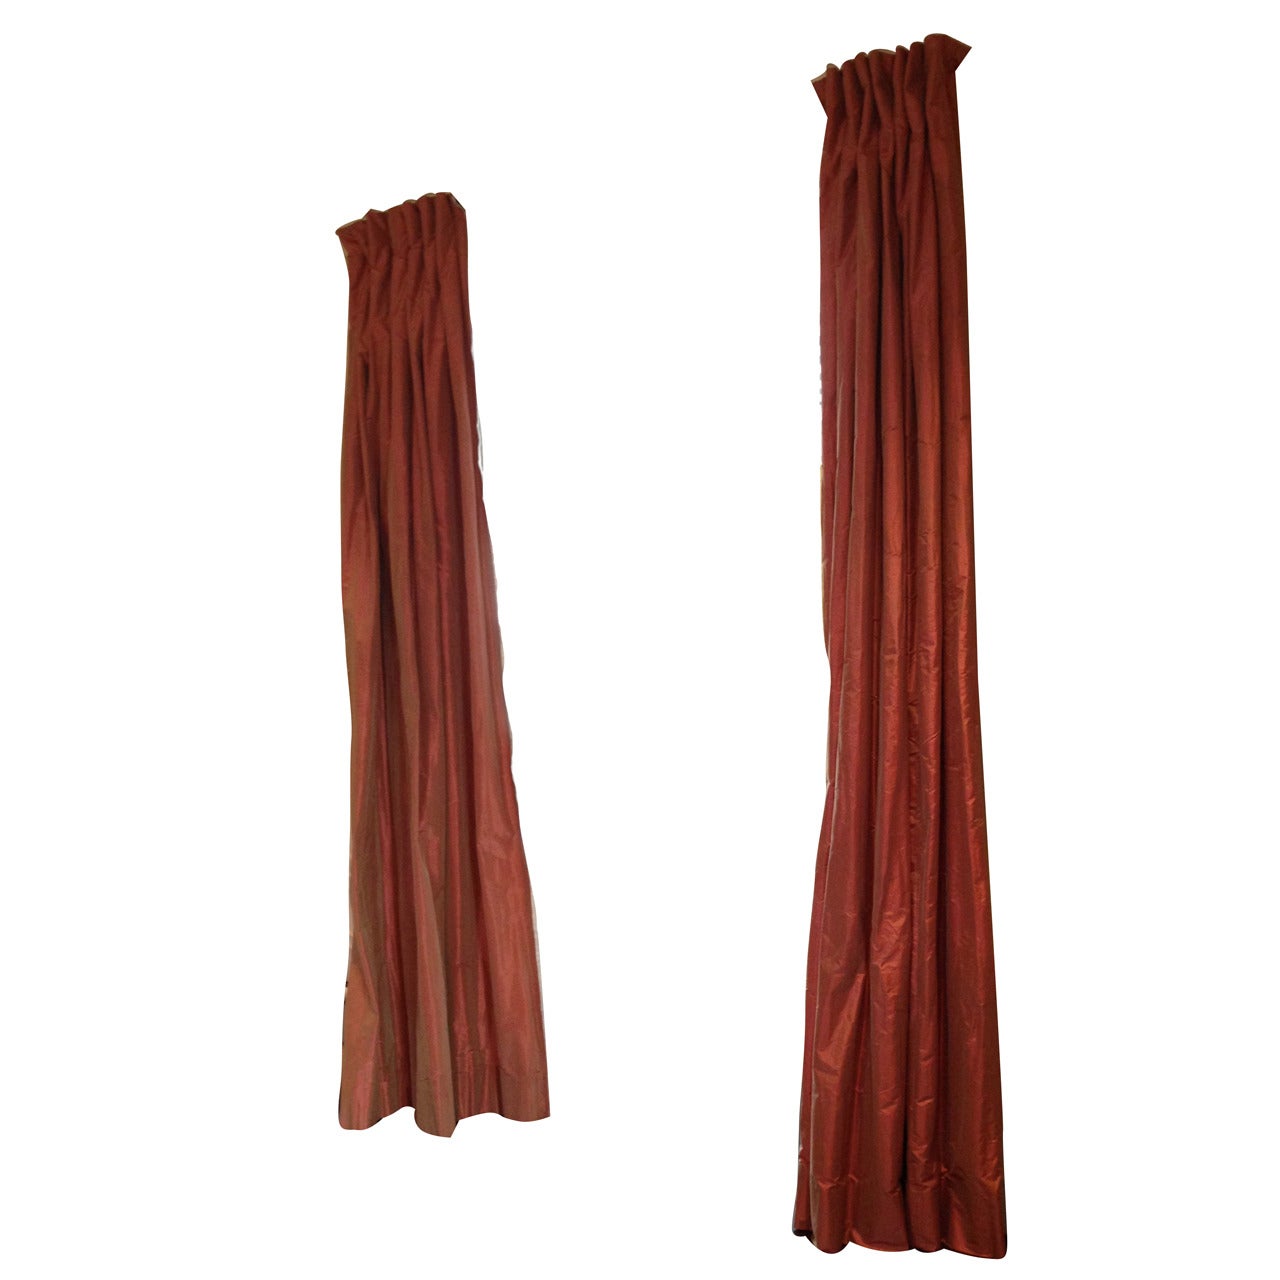 Silk Curtain Panels - Set of 4